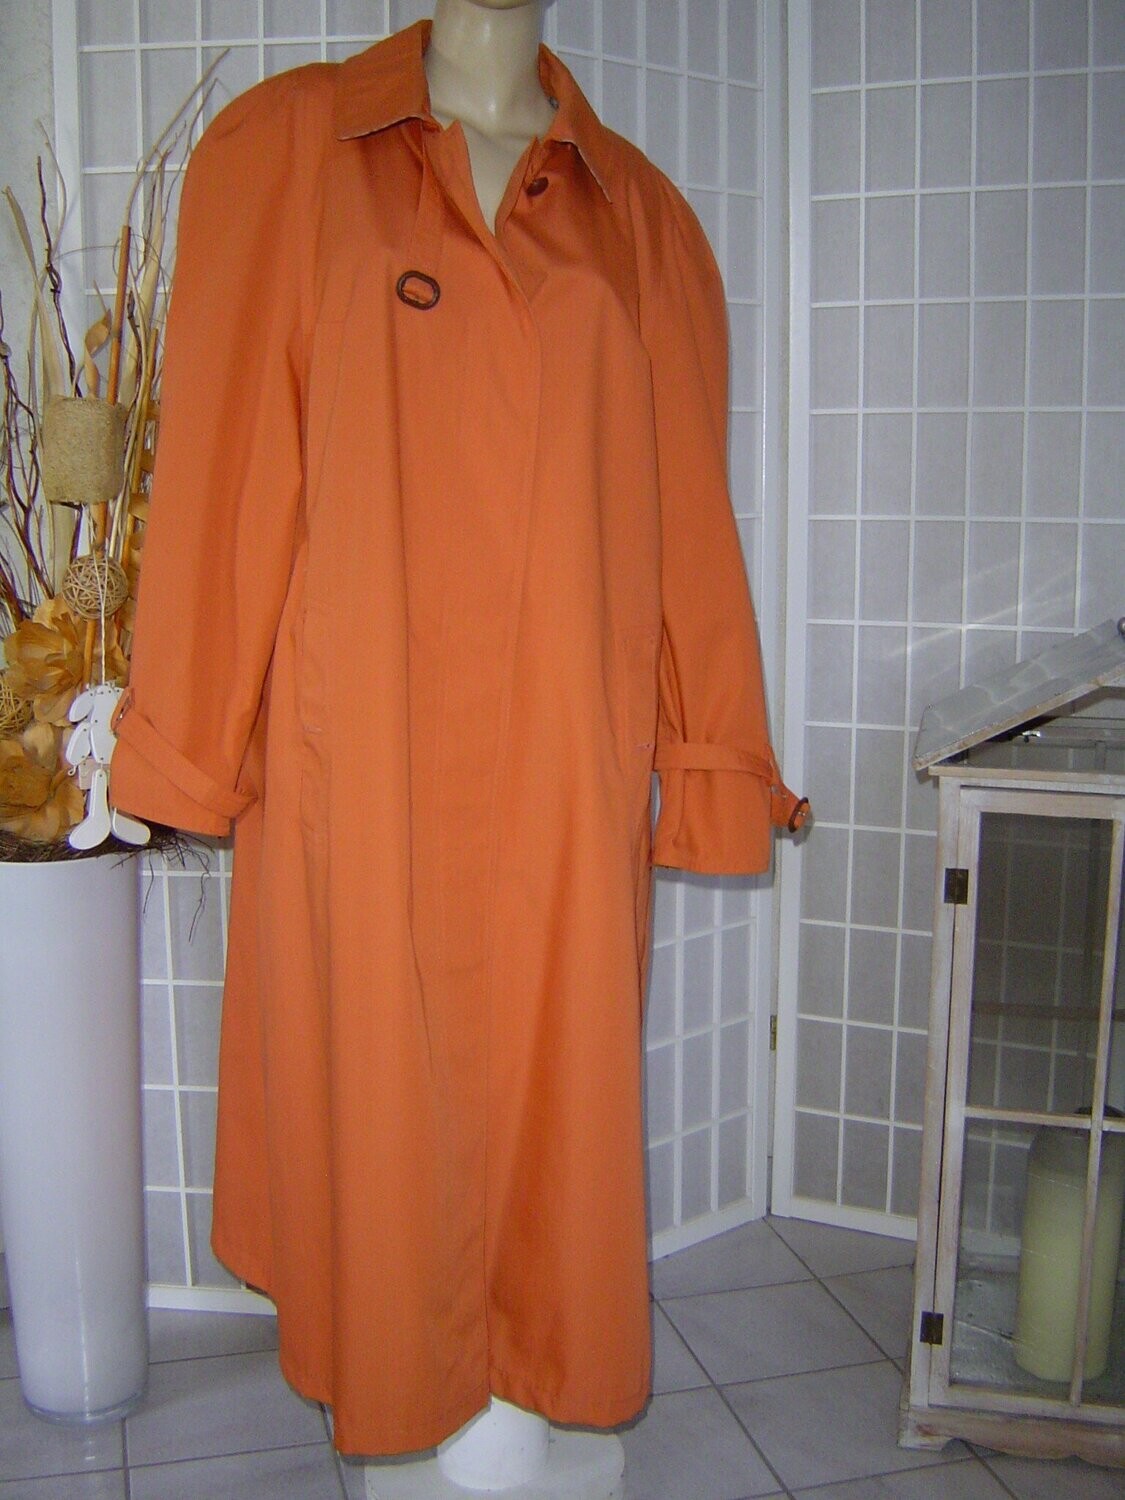 kleuring spijsvertering chirurg Damen Trenchcoat Gr. 44 lachs orange länge 114cm Mantel